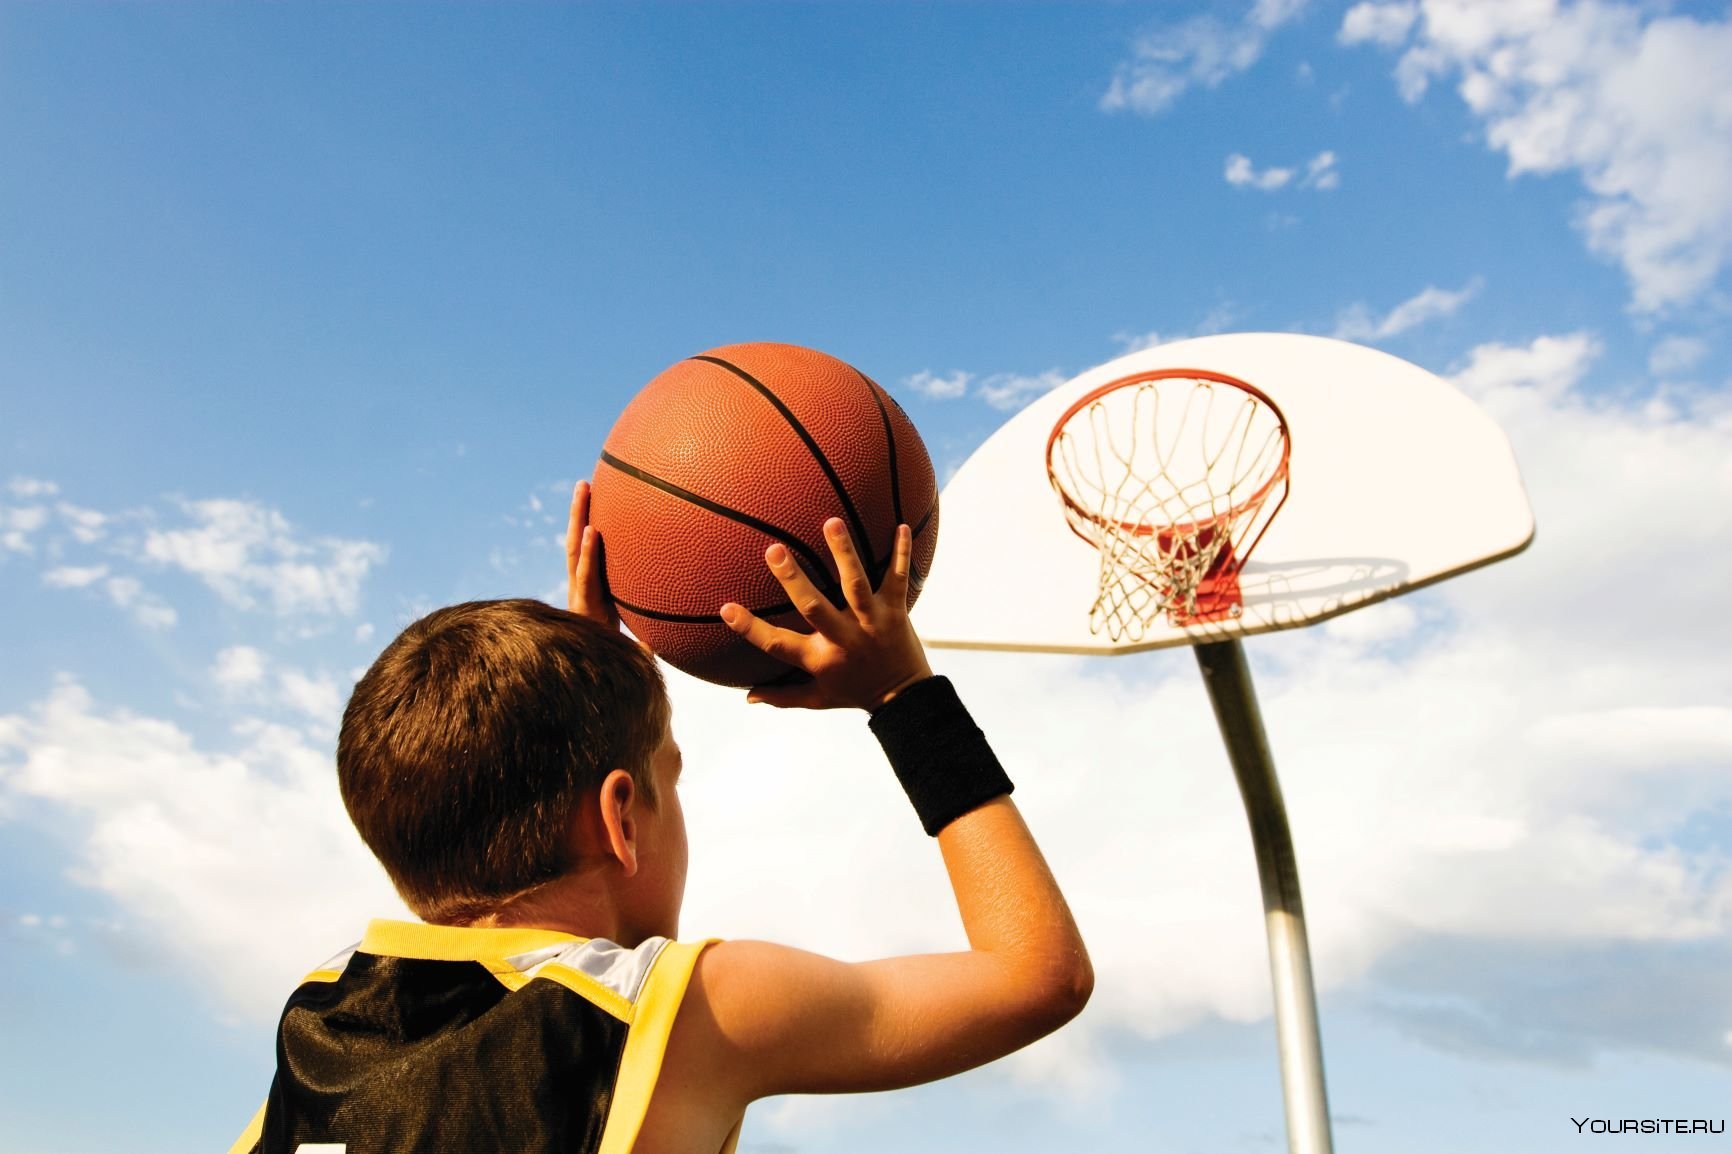 Sports and games we. Баскетбол дети. Бросать мяч. Спорт дети. Спорт баскетбол дети.